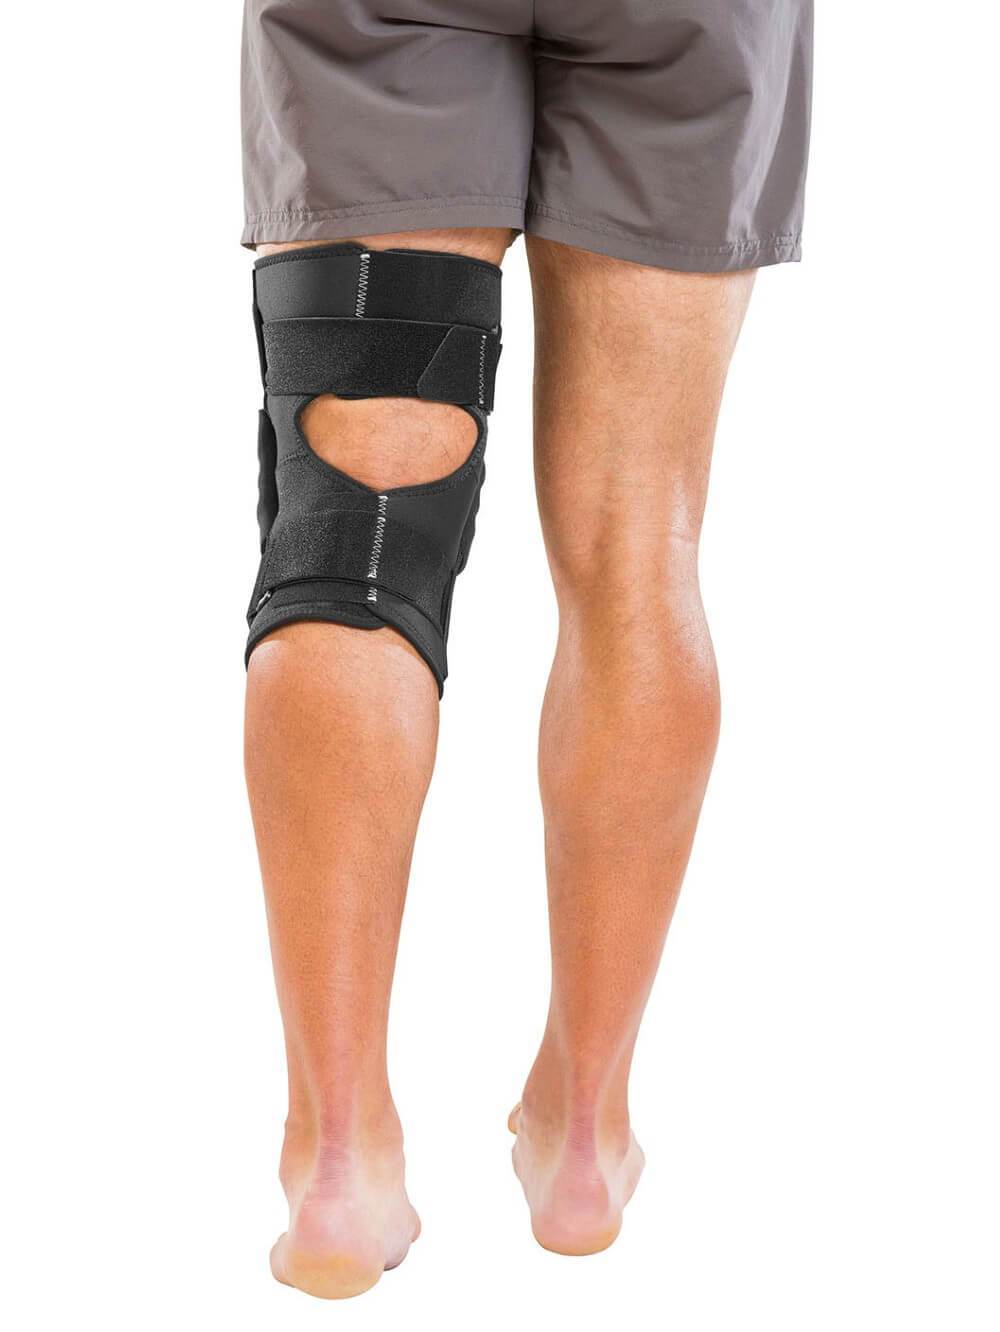 mueller wraparound knee brace hinges back